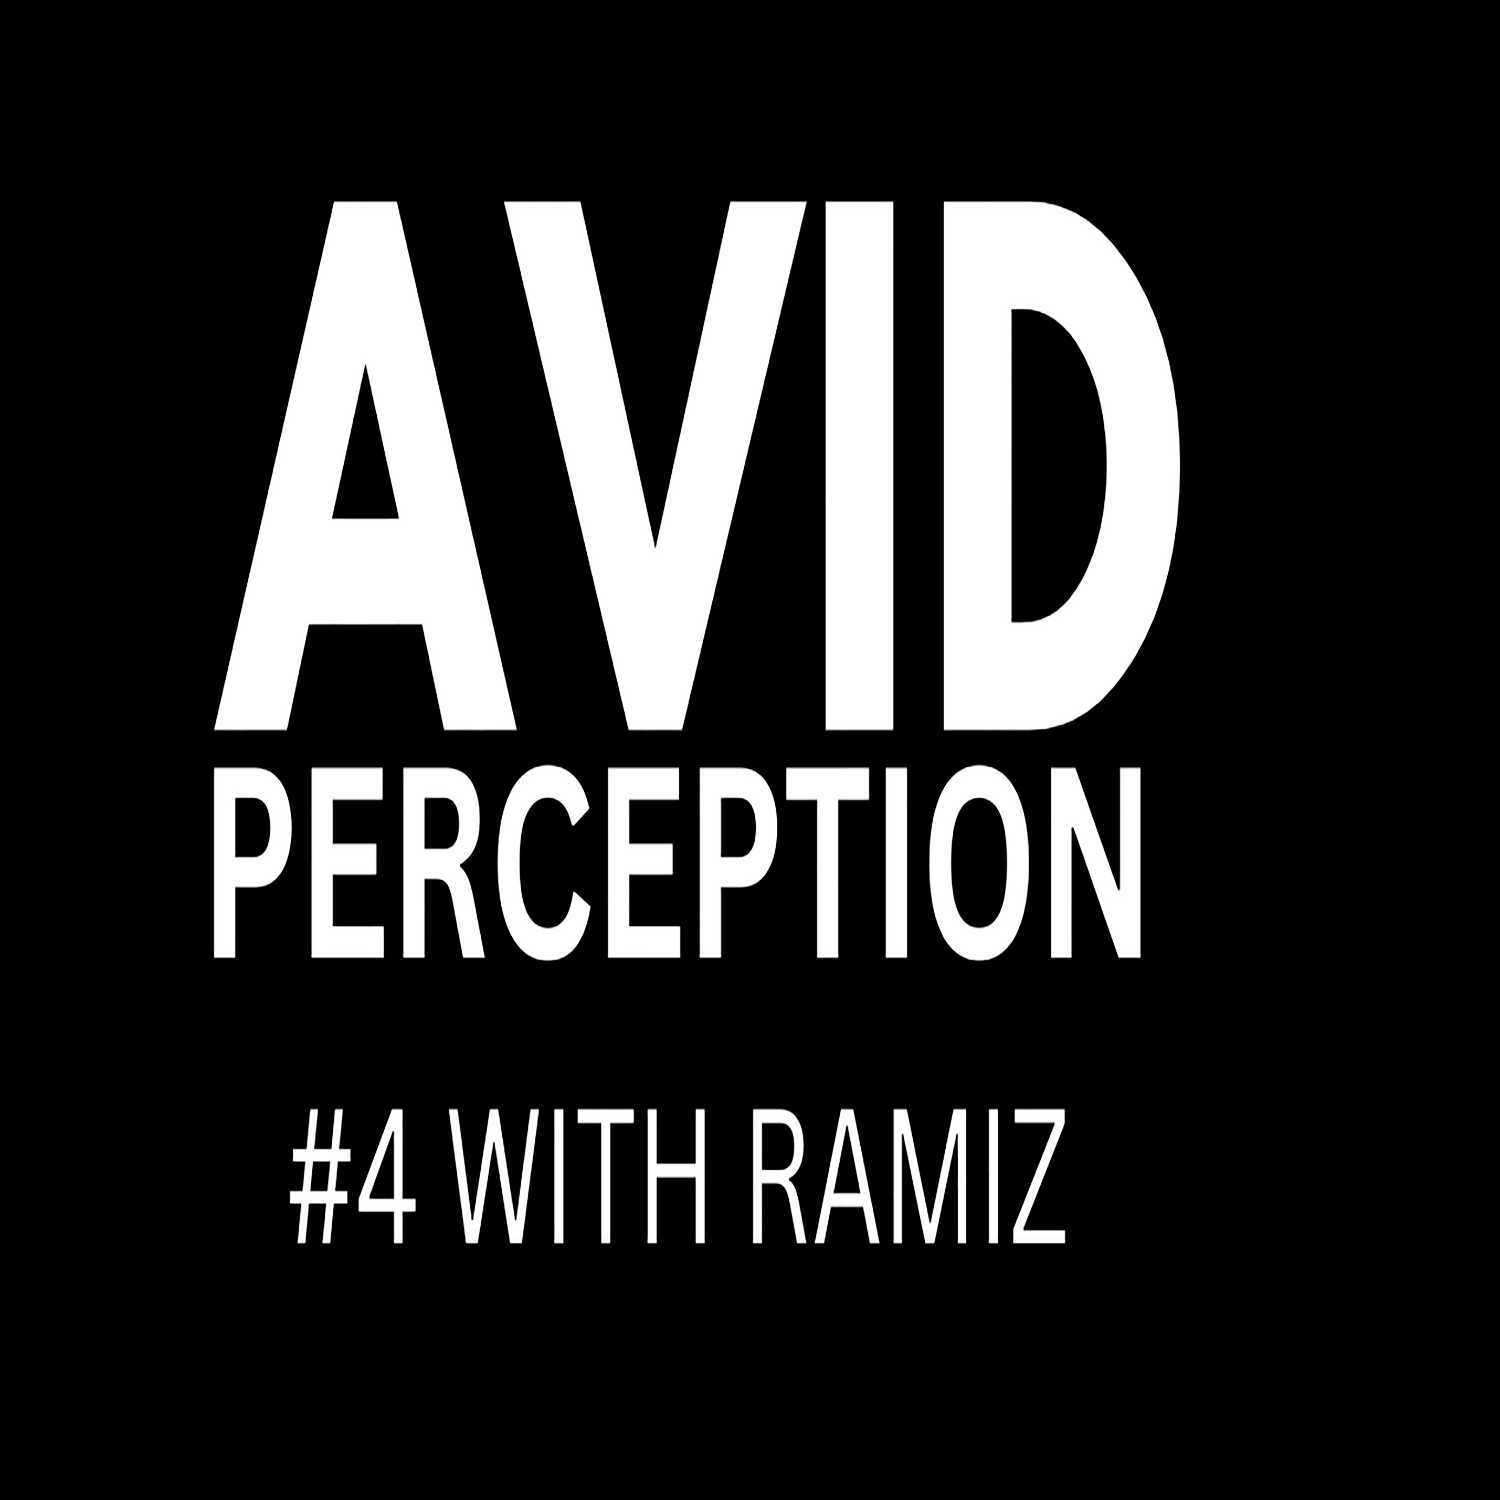 #4 - AVID PERCEPTION WITH RAMIZ